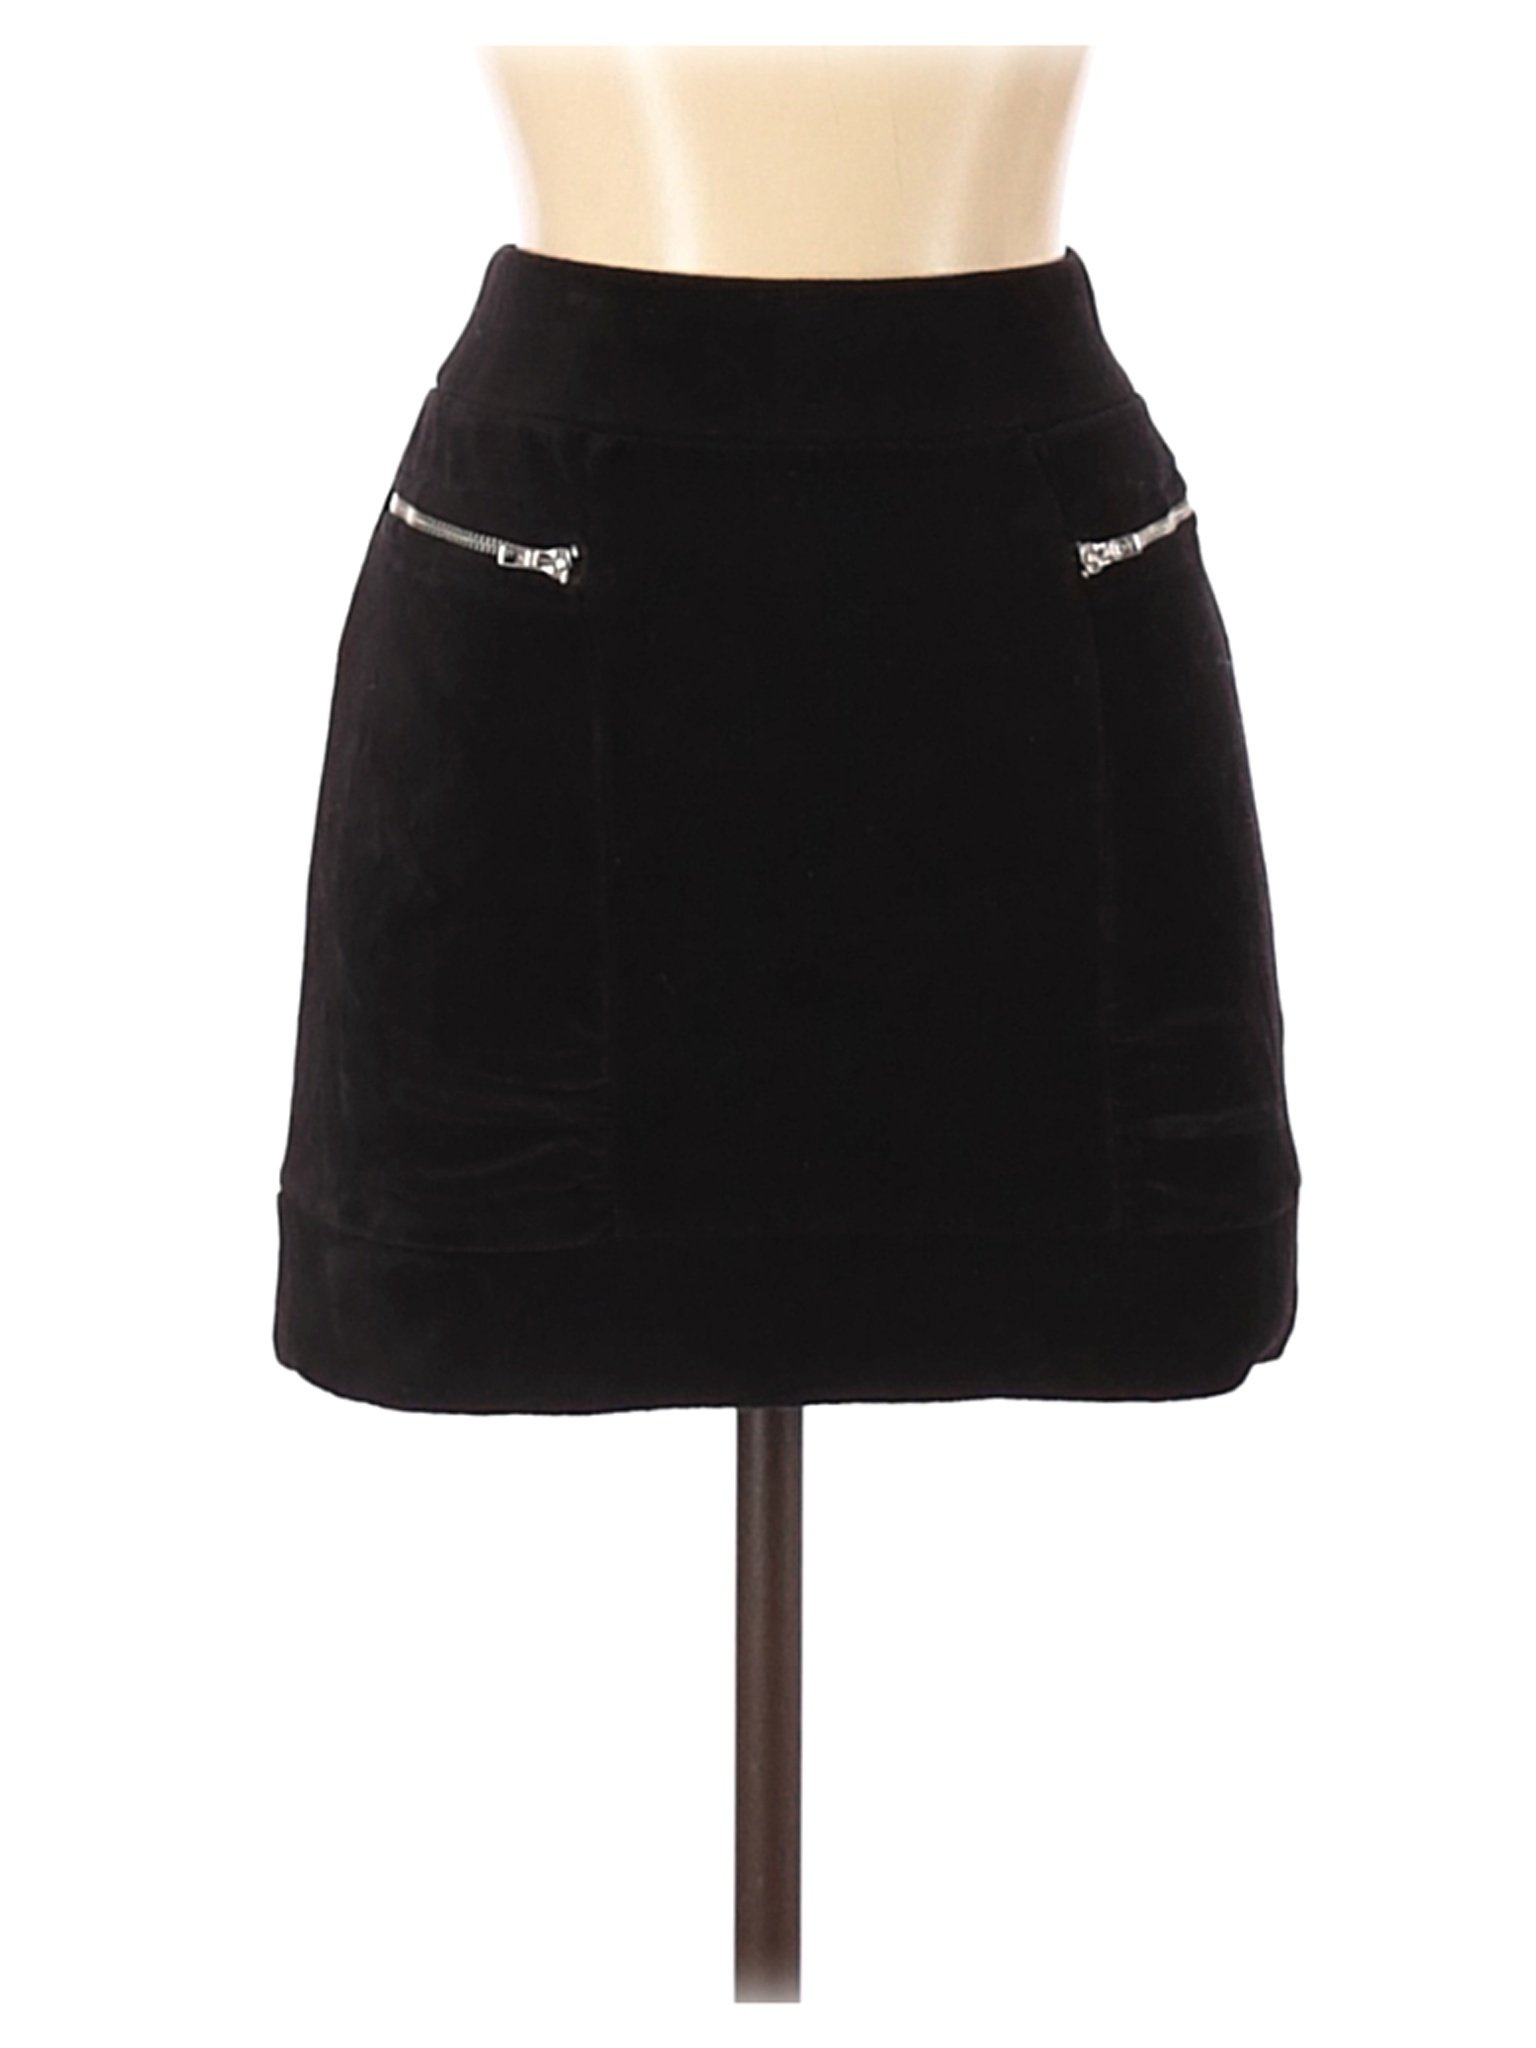 Juicy Couture Women Black Casual Skirt P | eBay